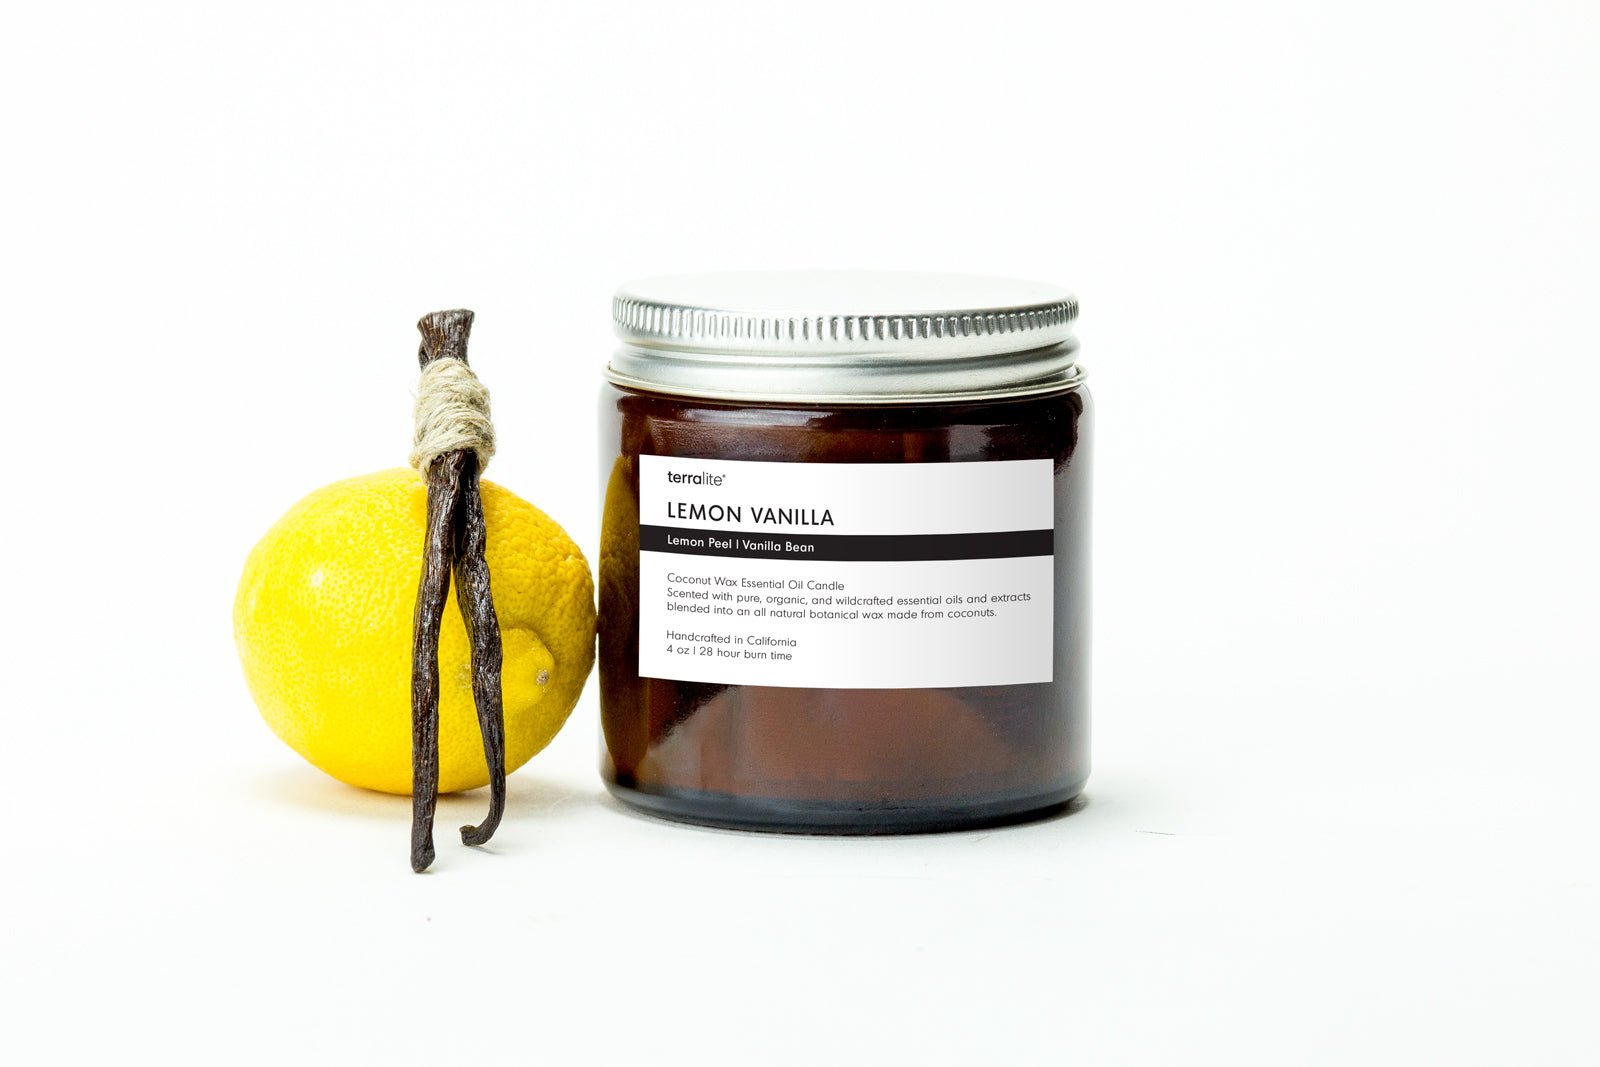 Lemon Vanilla Essential Oil Candle - 4 oz.